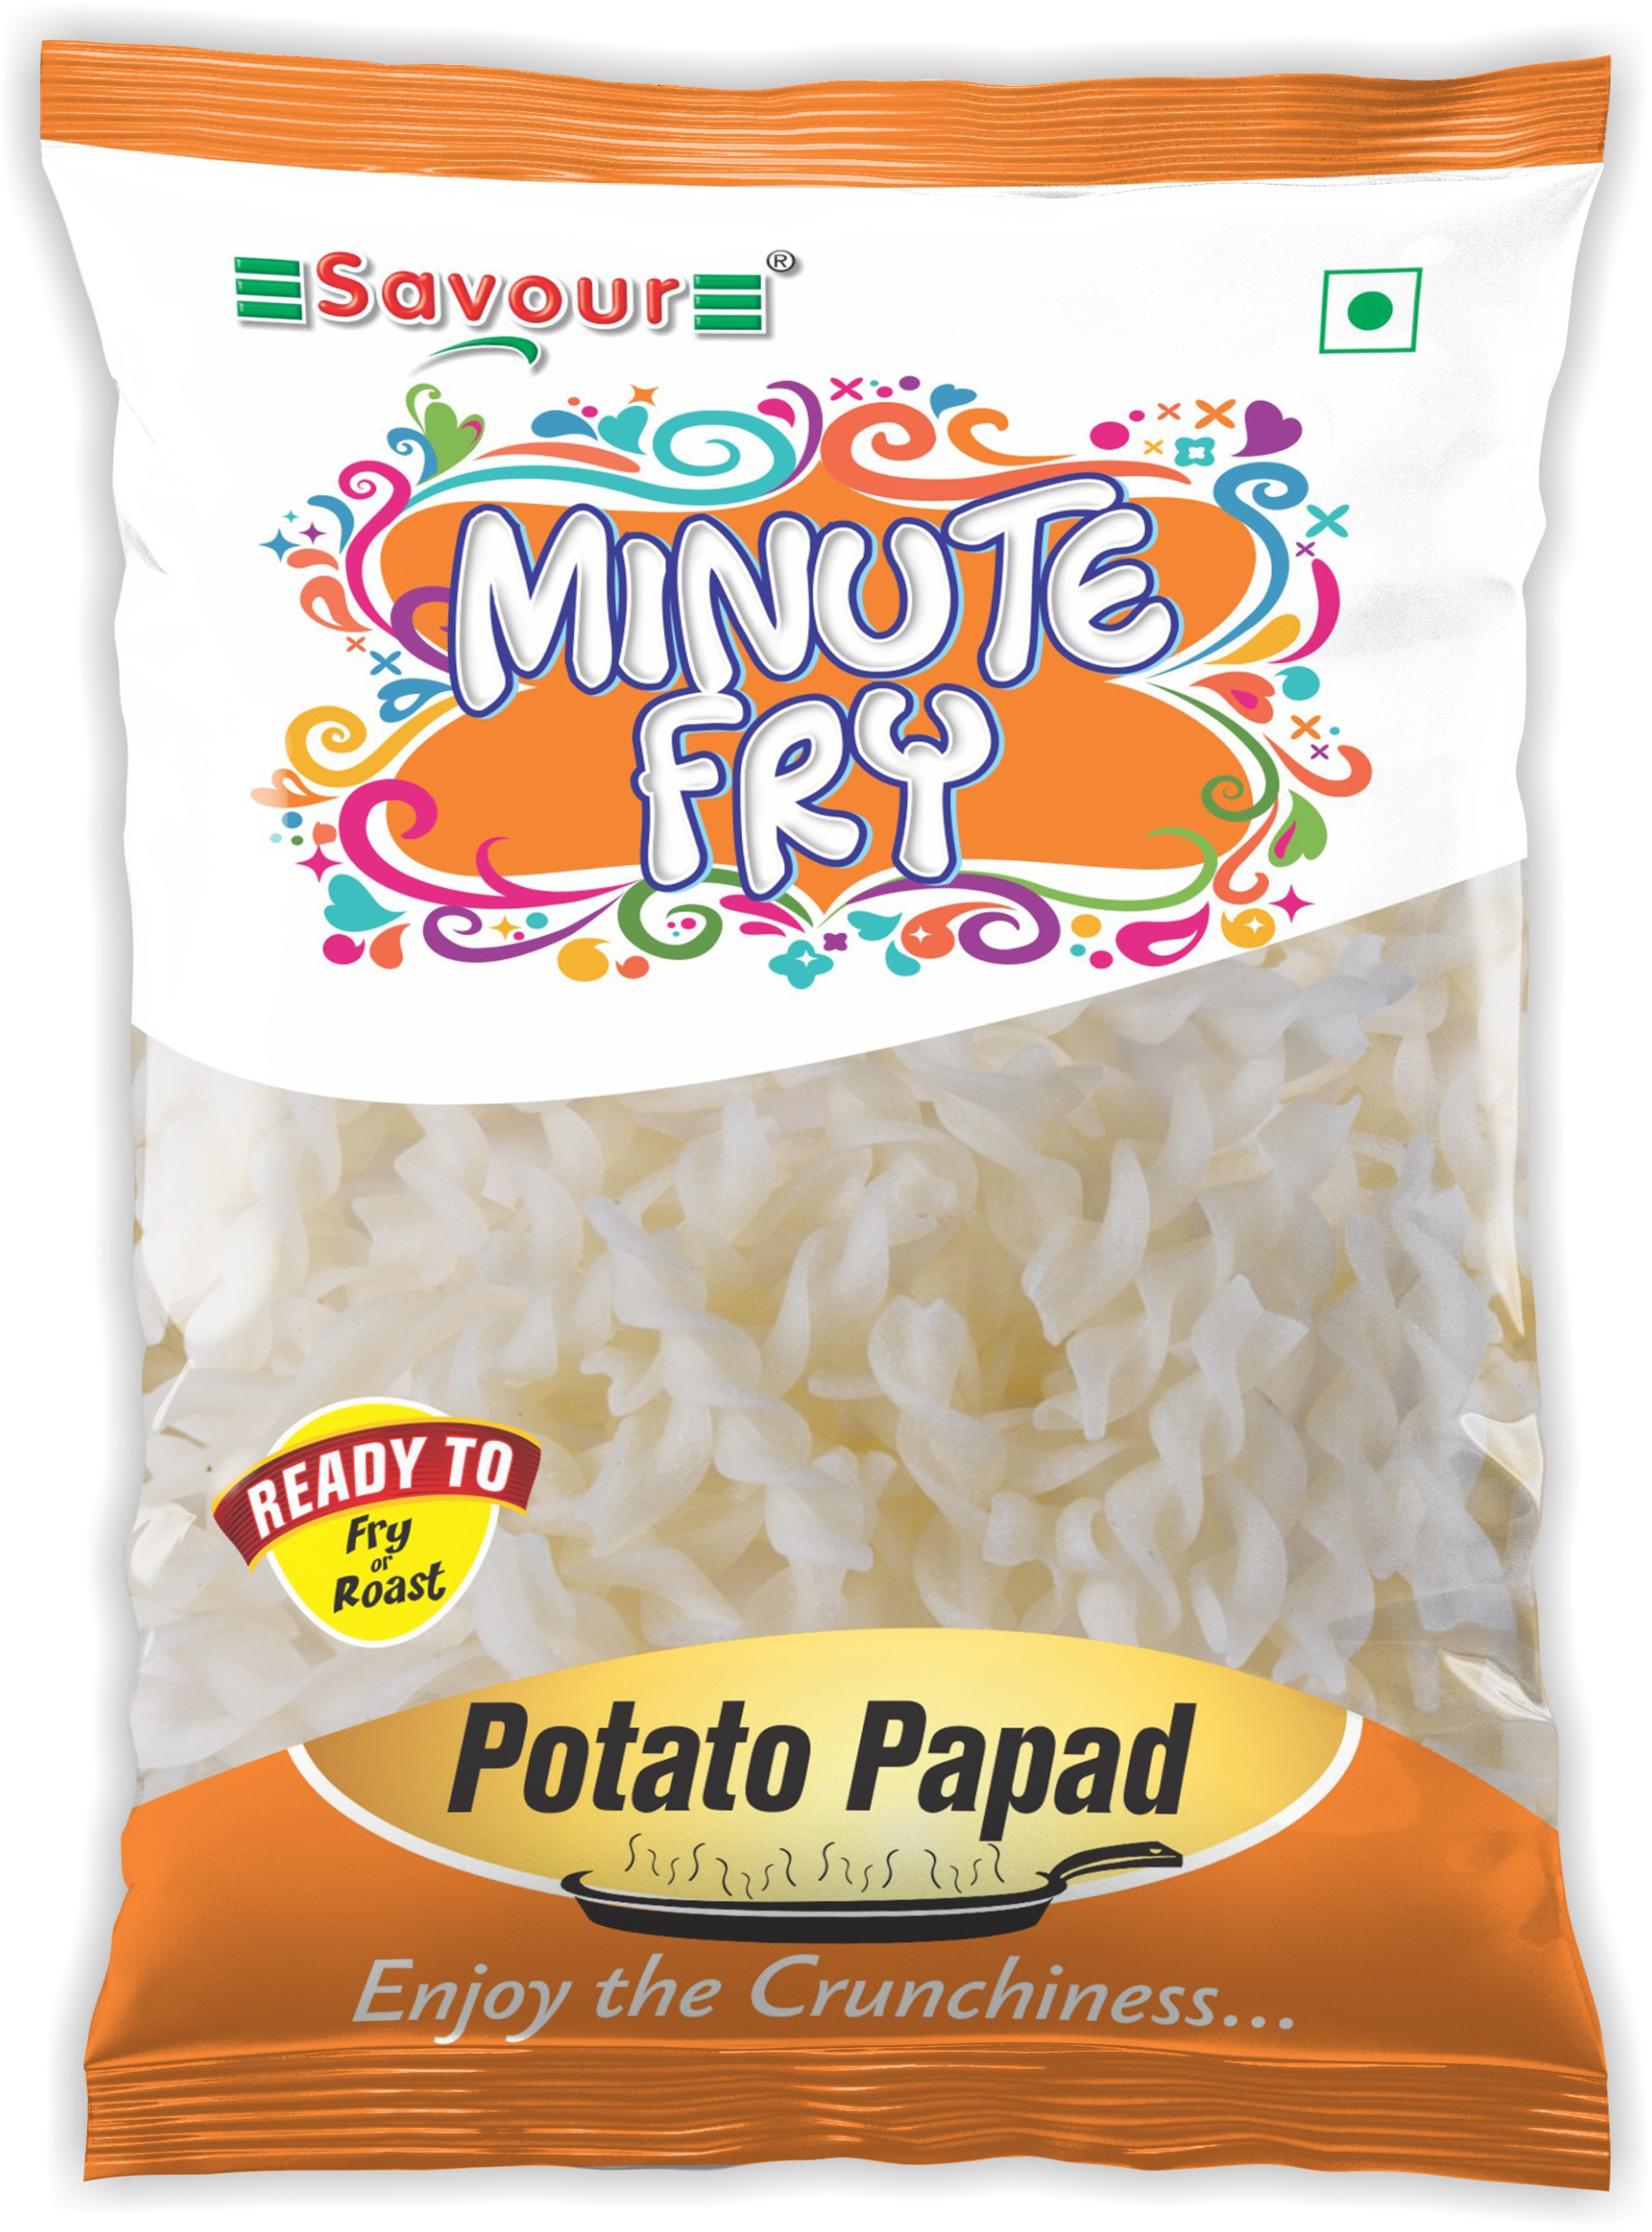 Savour Minute Fry Potato Papad